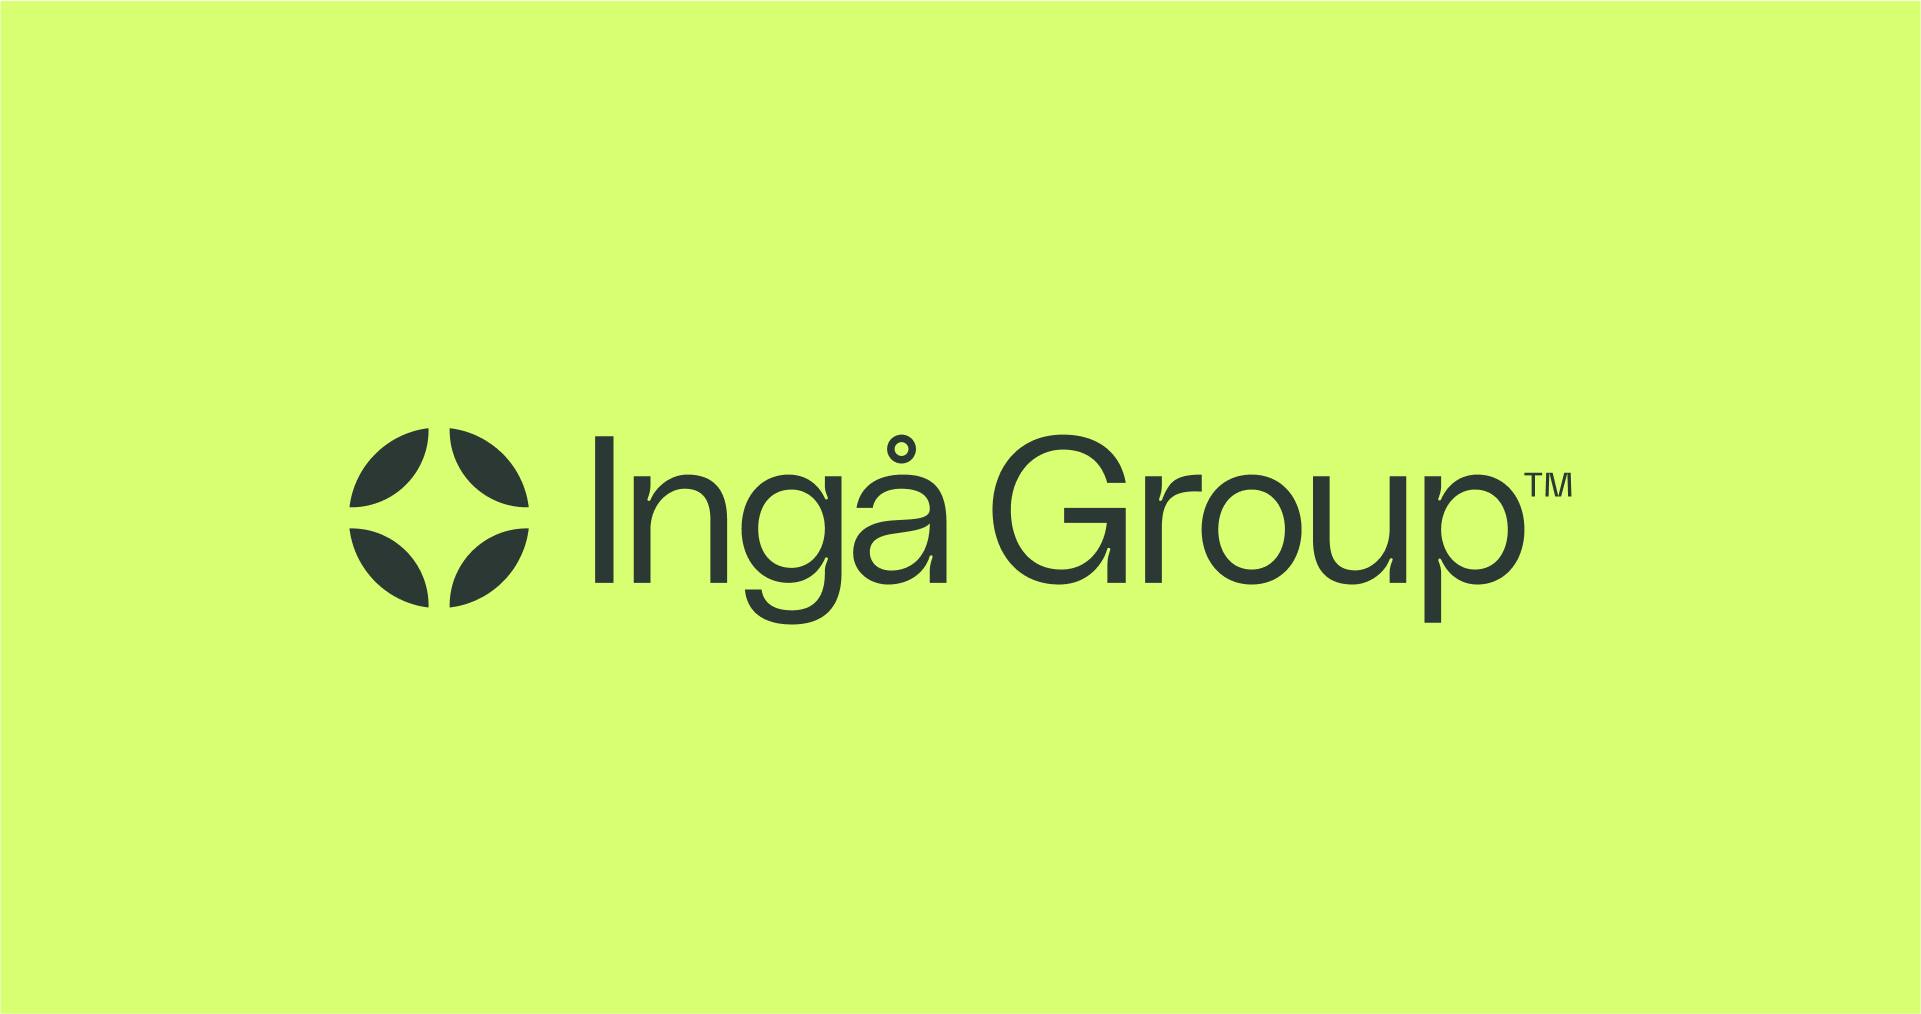 Inga Group logo on yellow